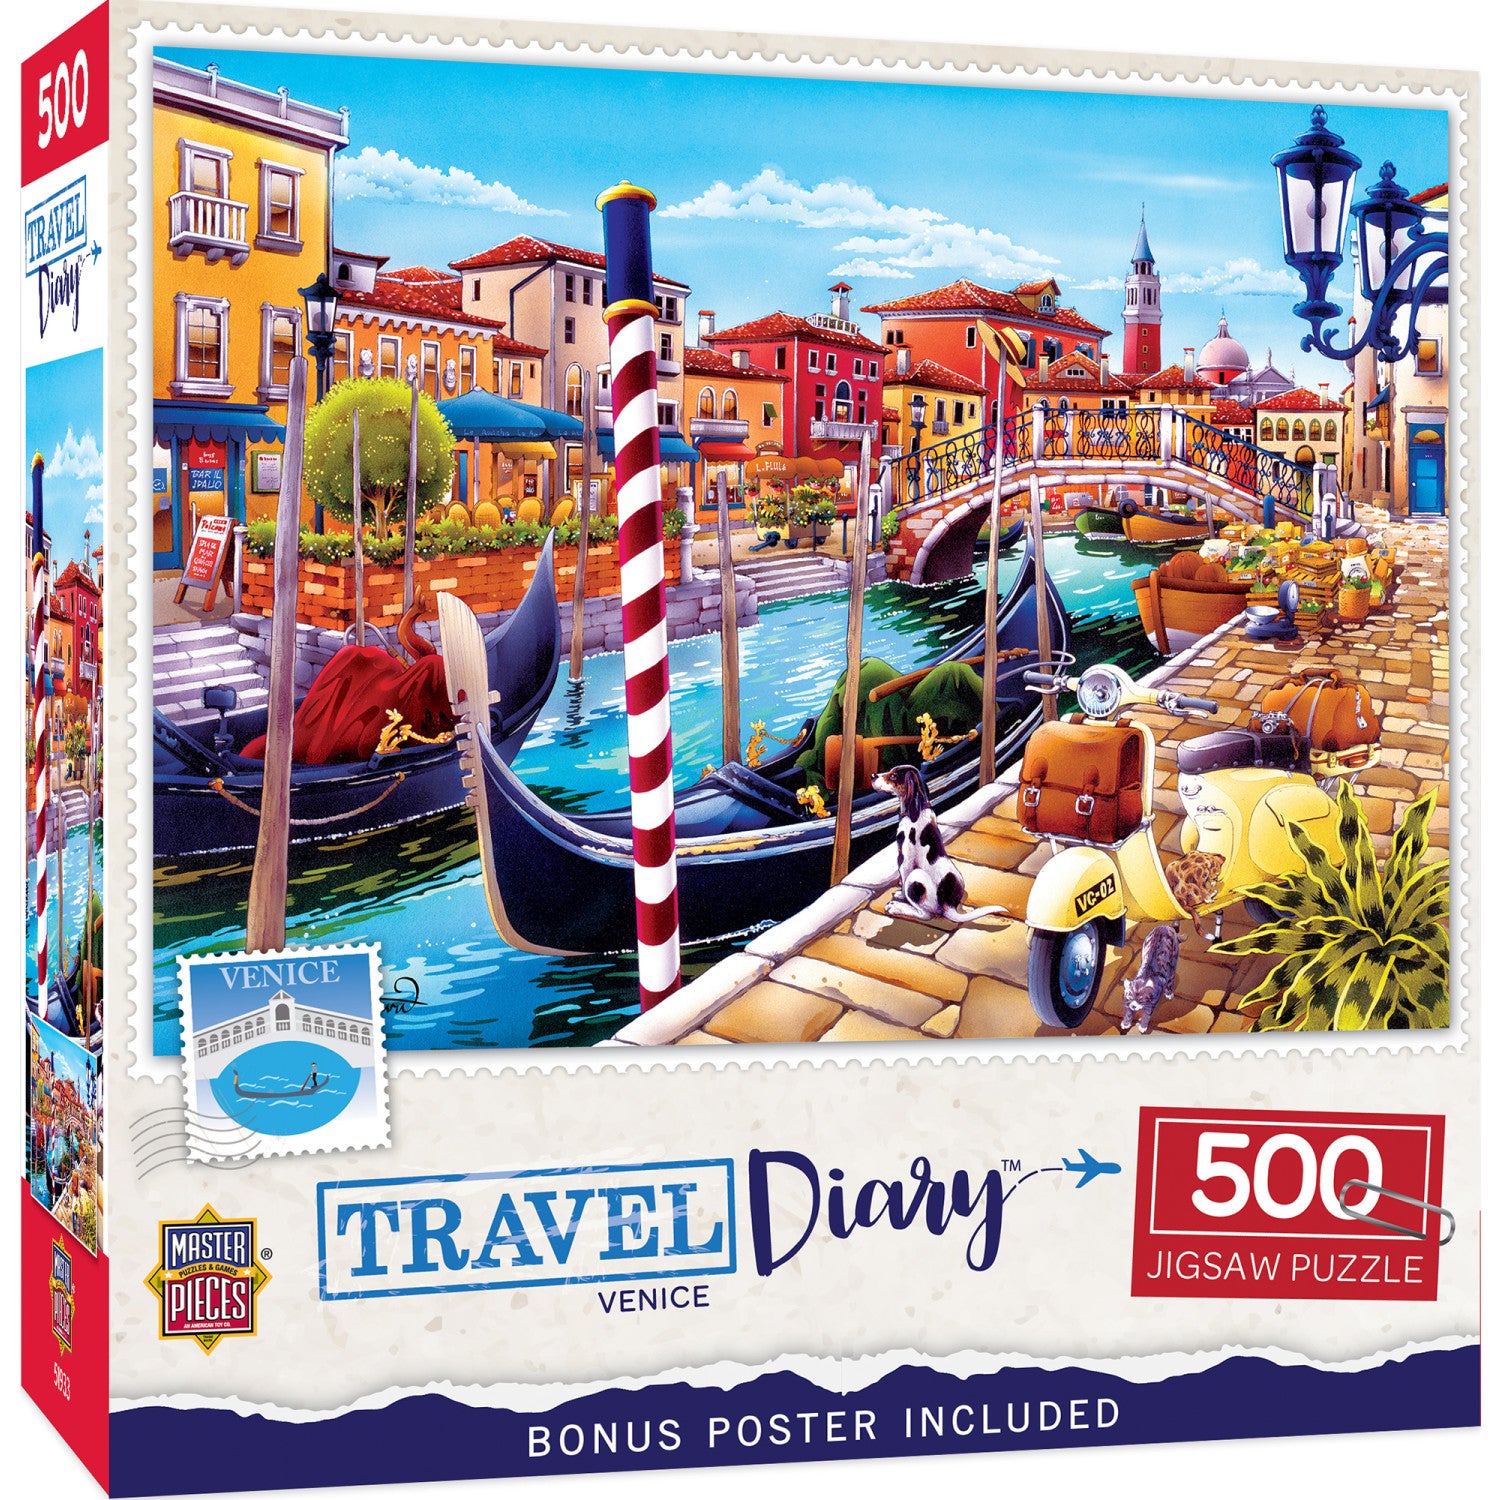 Travel Diary - Venice 500 Piece Jigsaw Puzzle